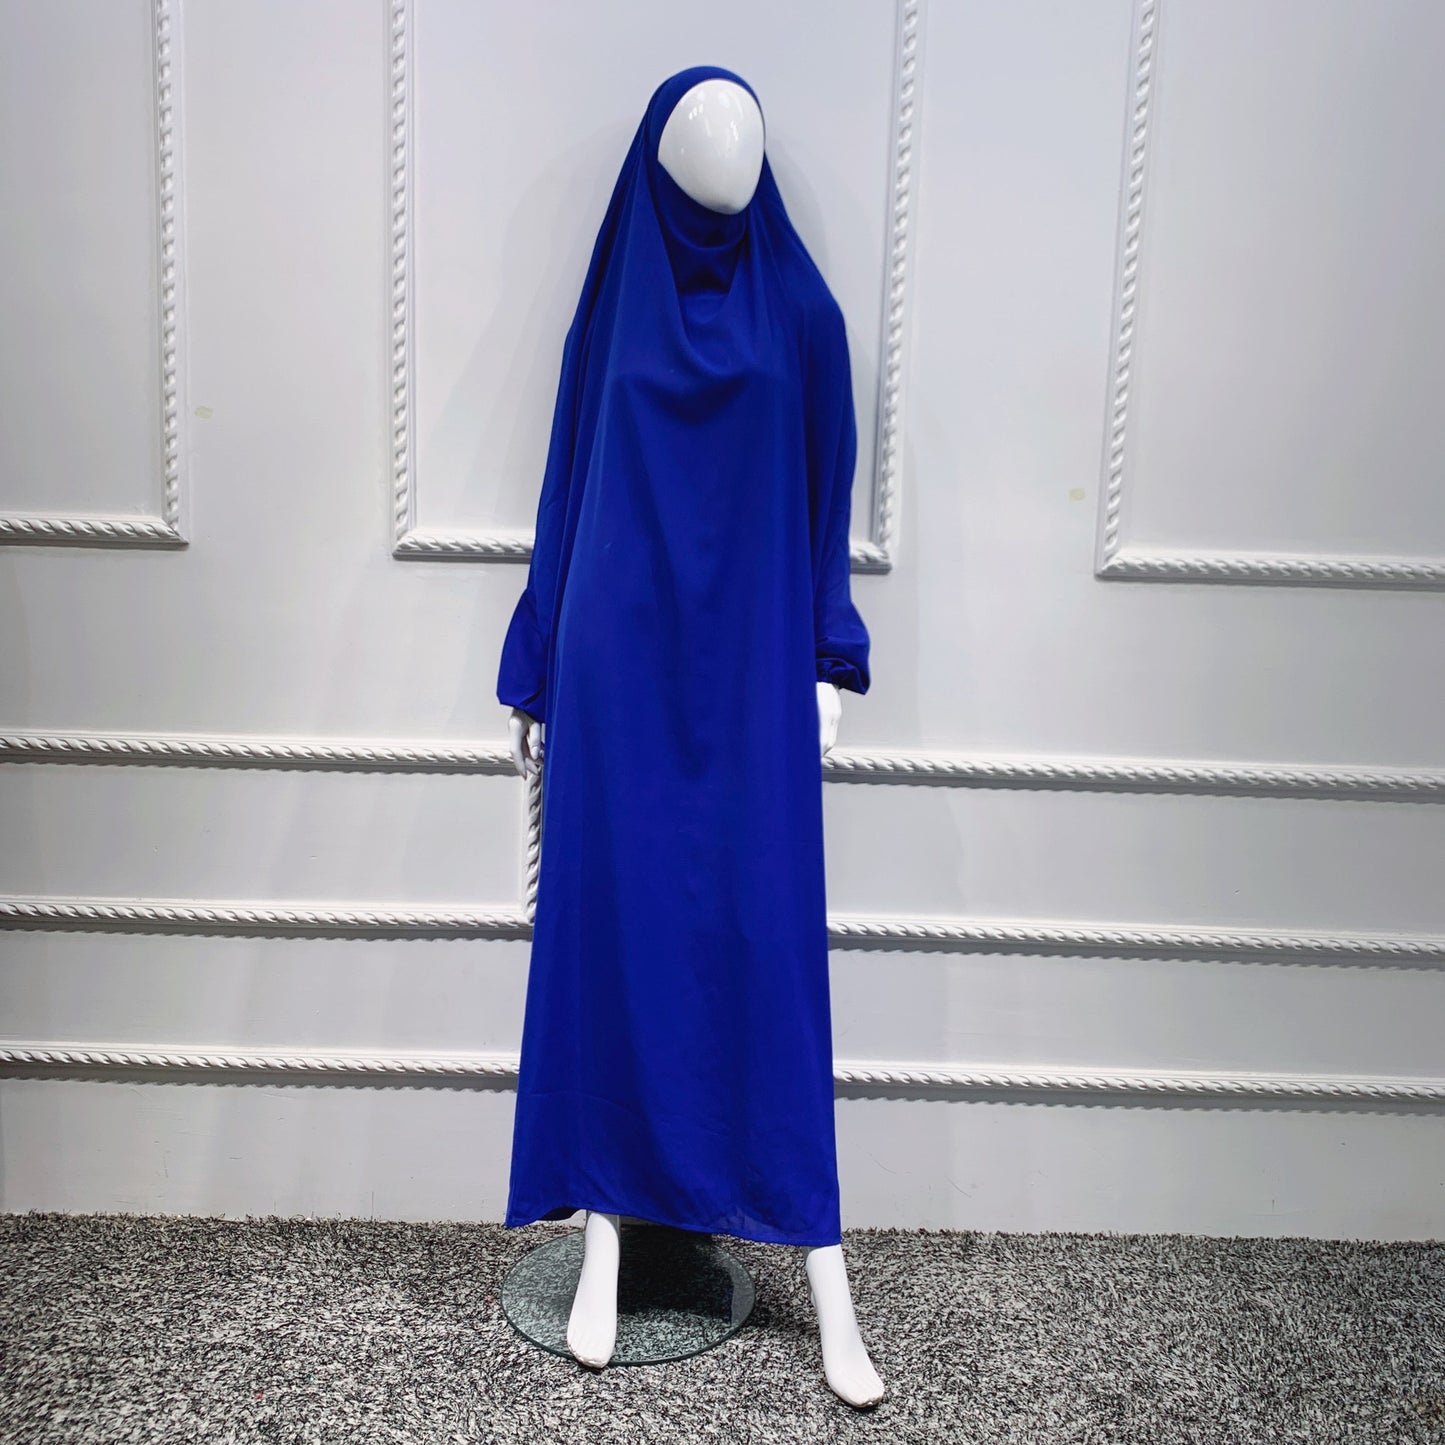 Muslim Women Hijab Dress Prayer